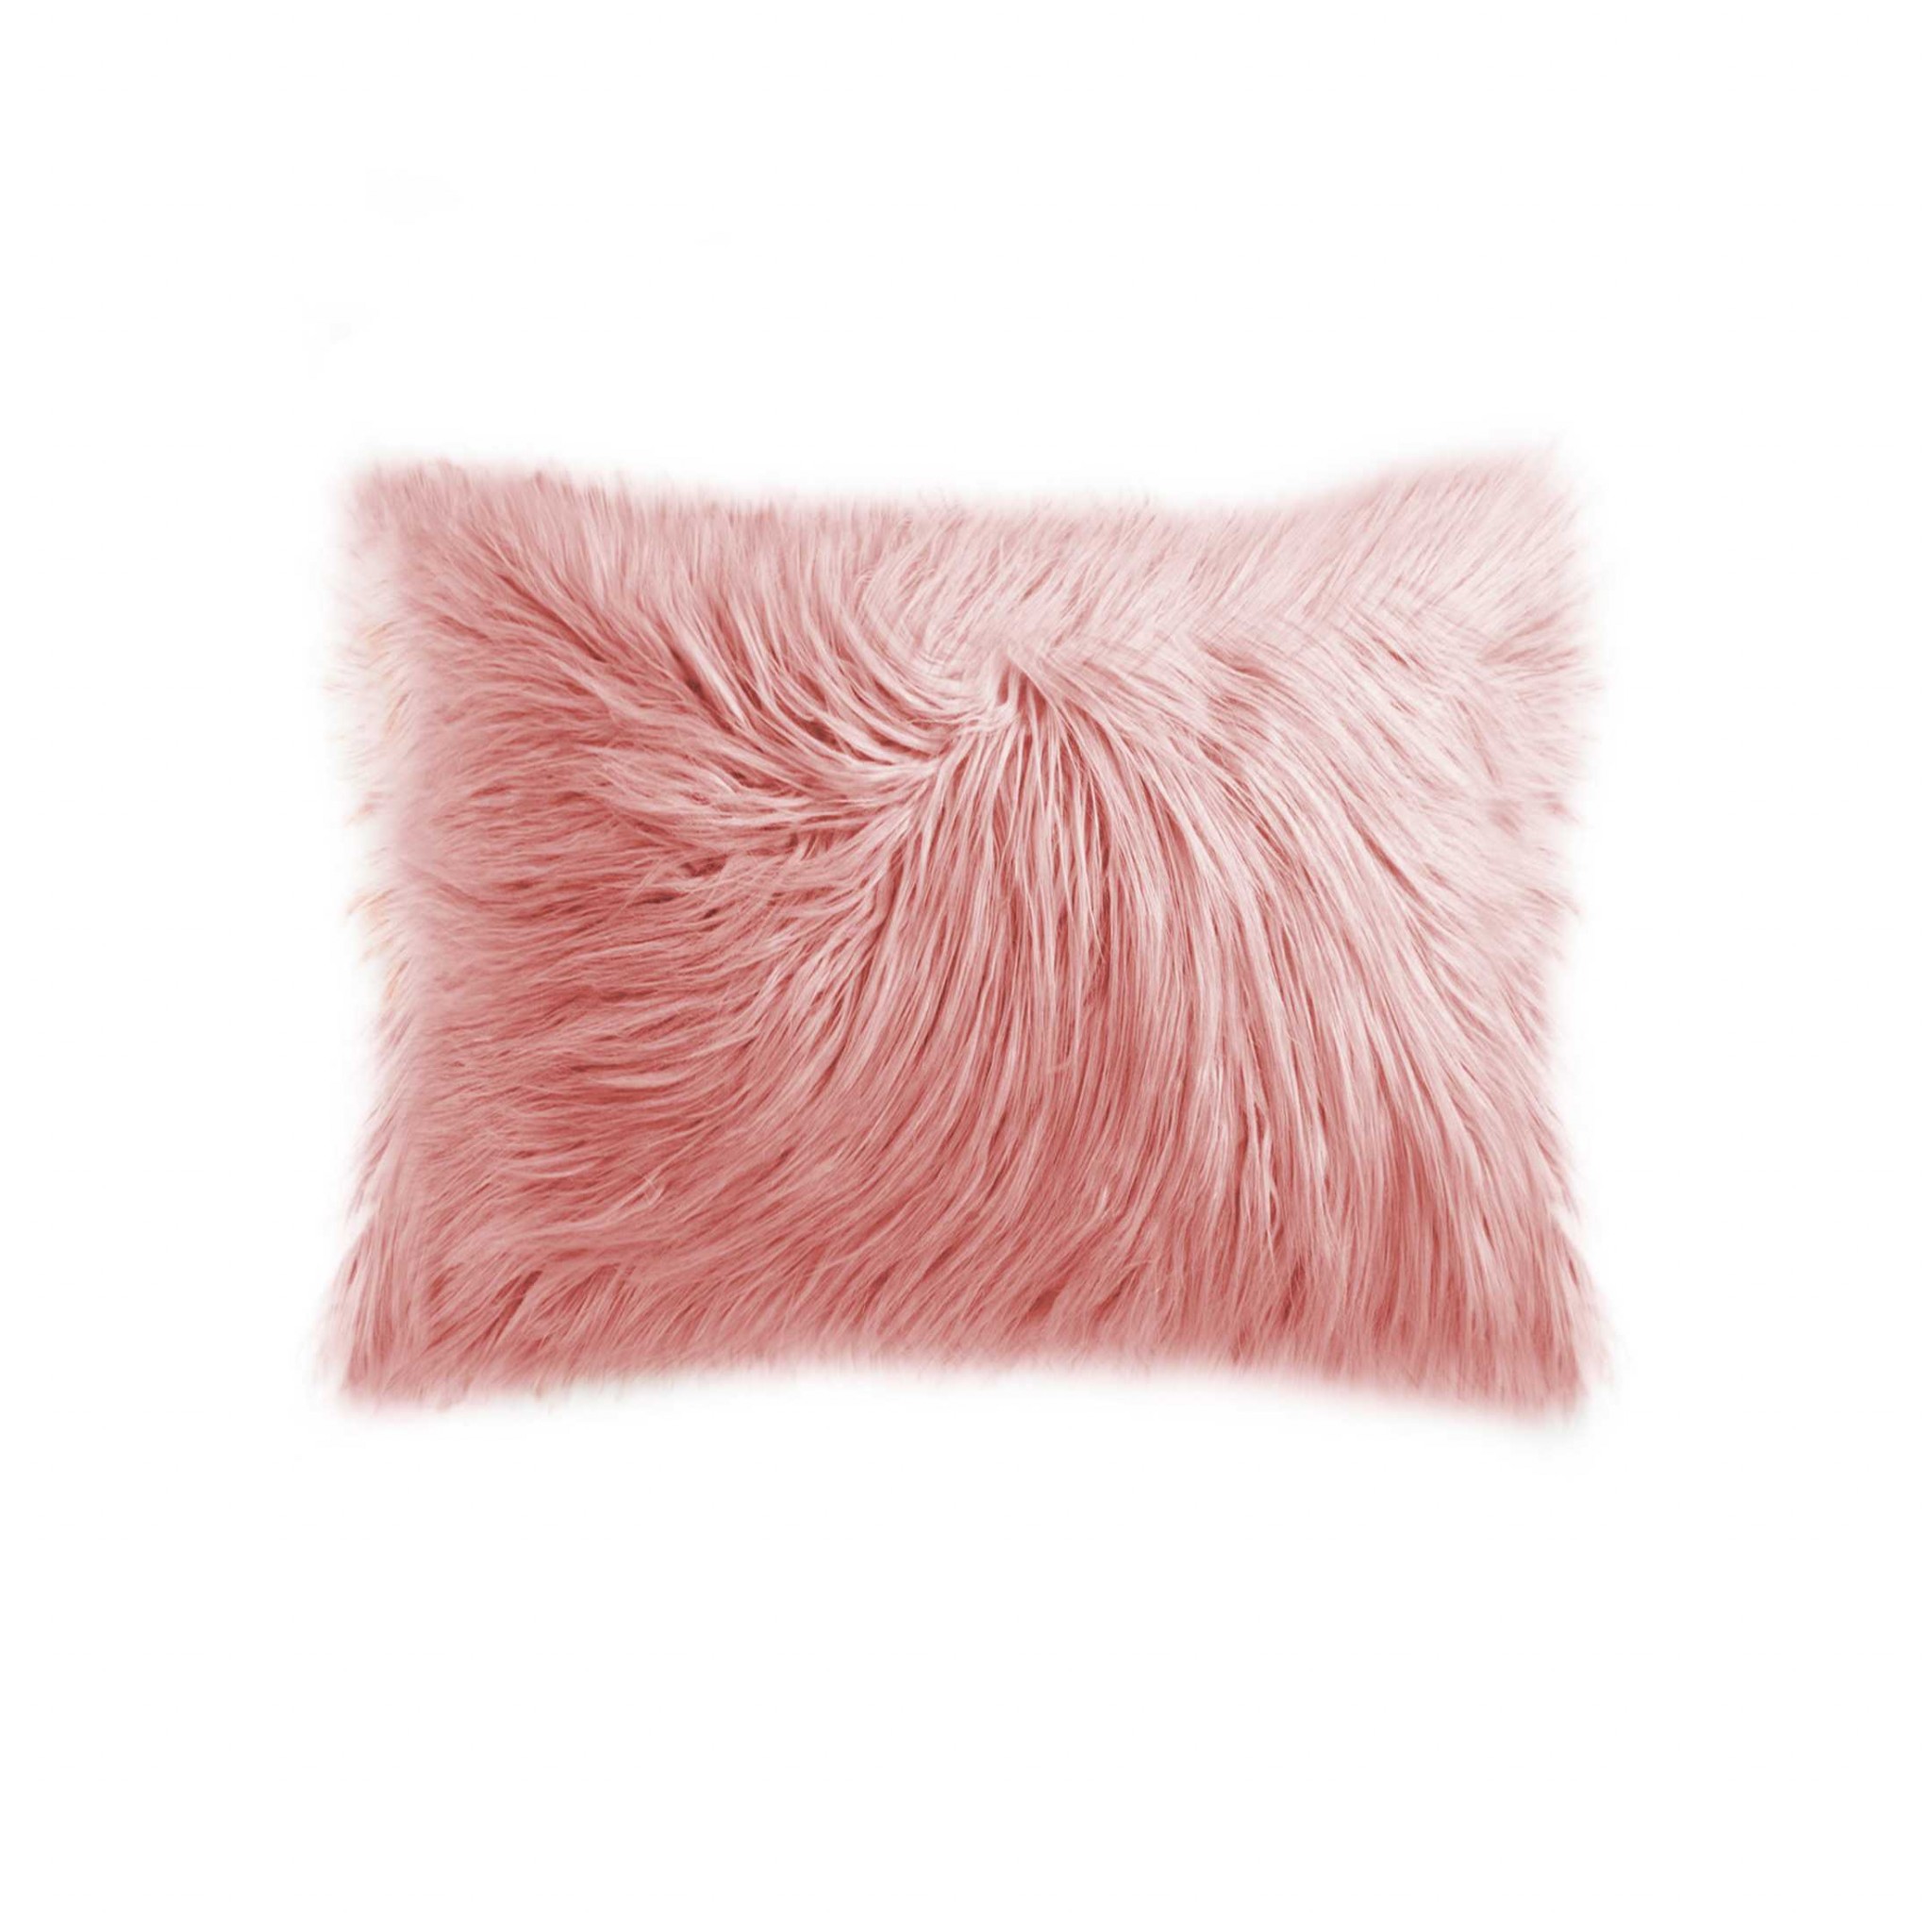 12" x 20" x 5" Dusty Rose Sheepskin Faux Fur - Pillow